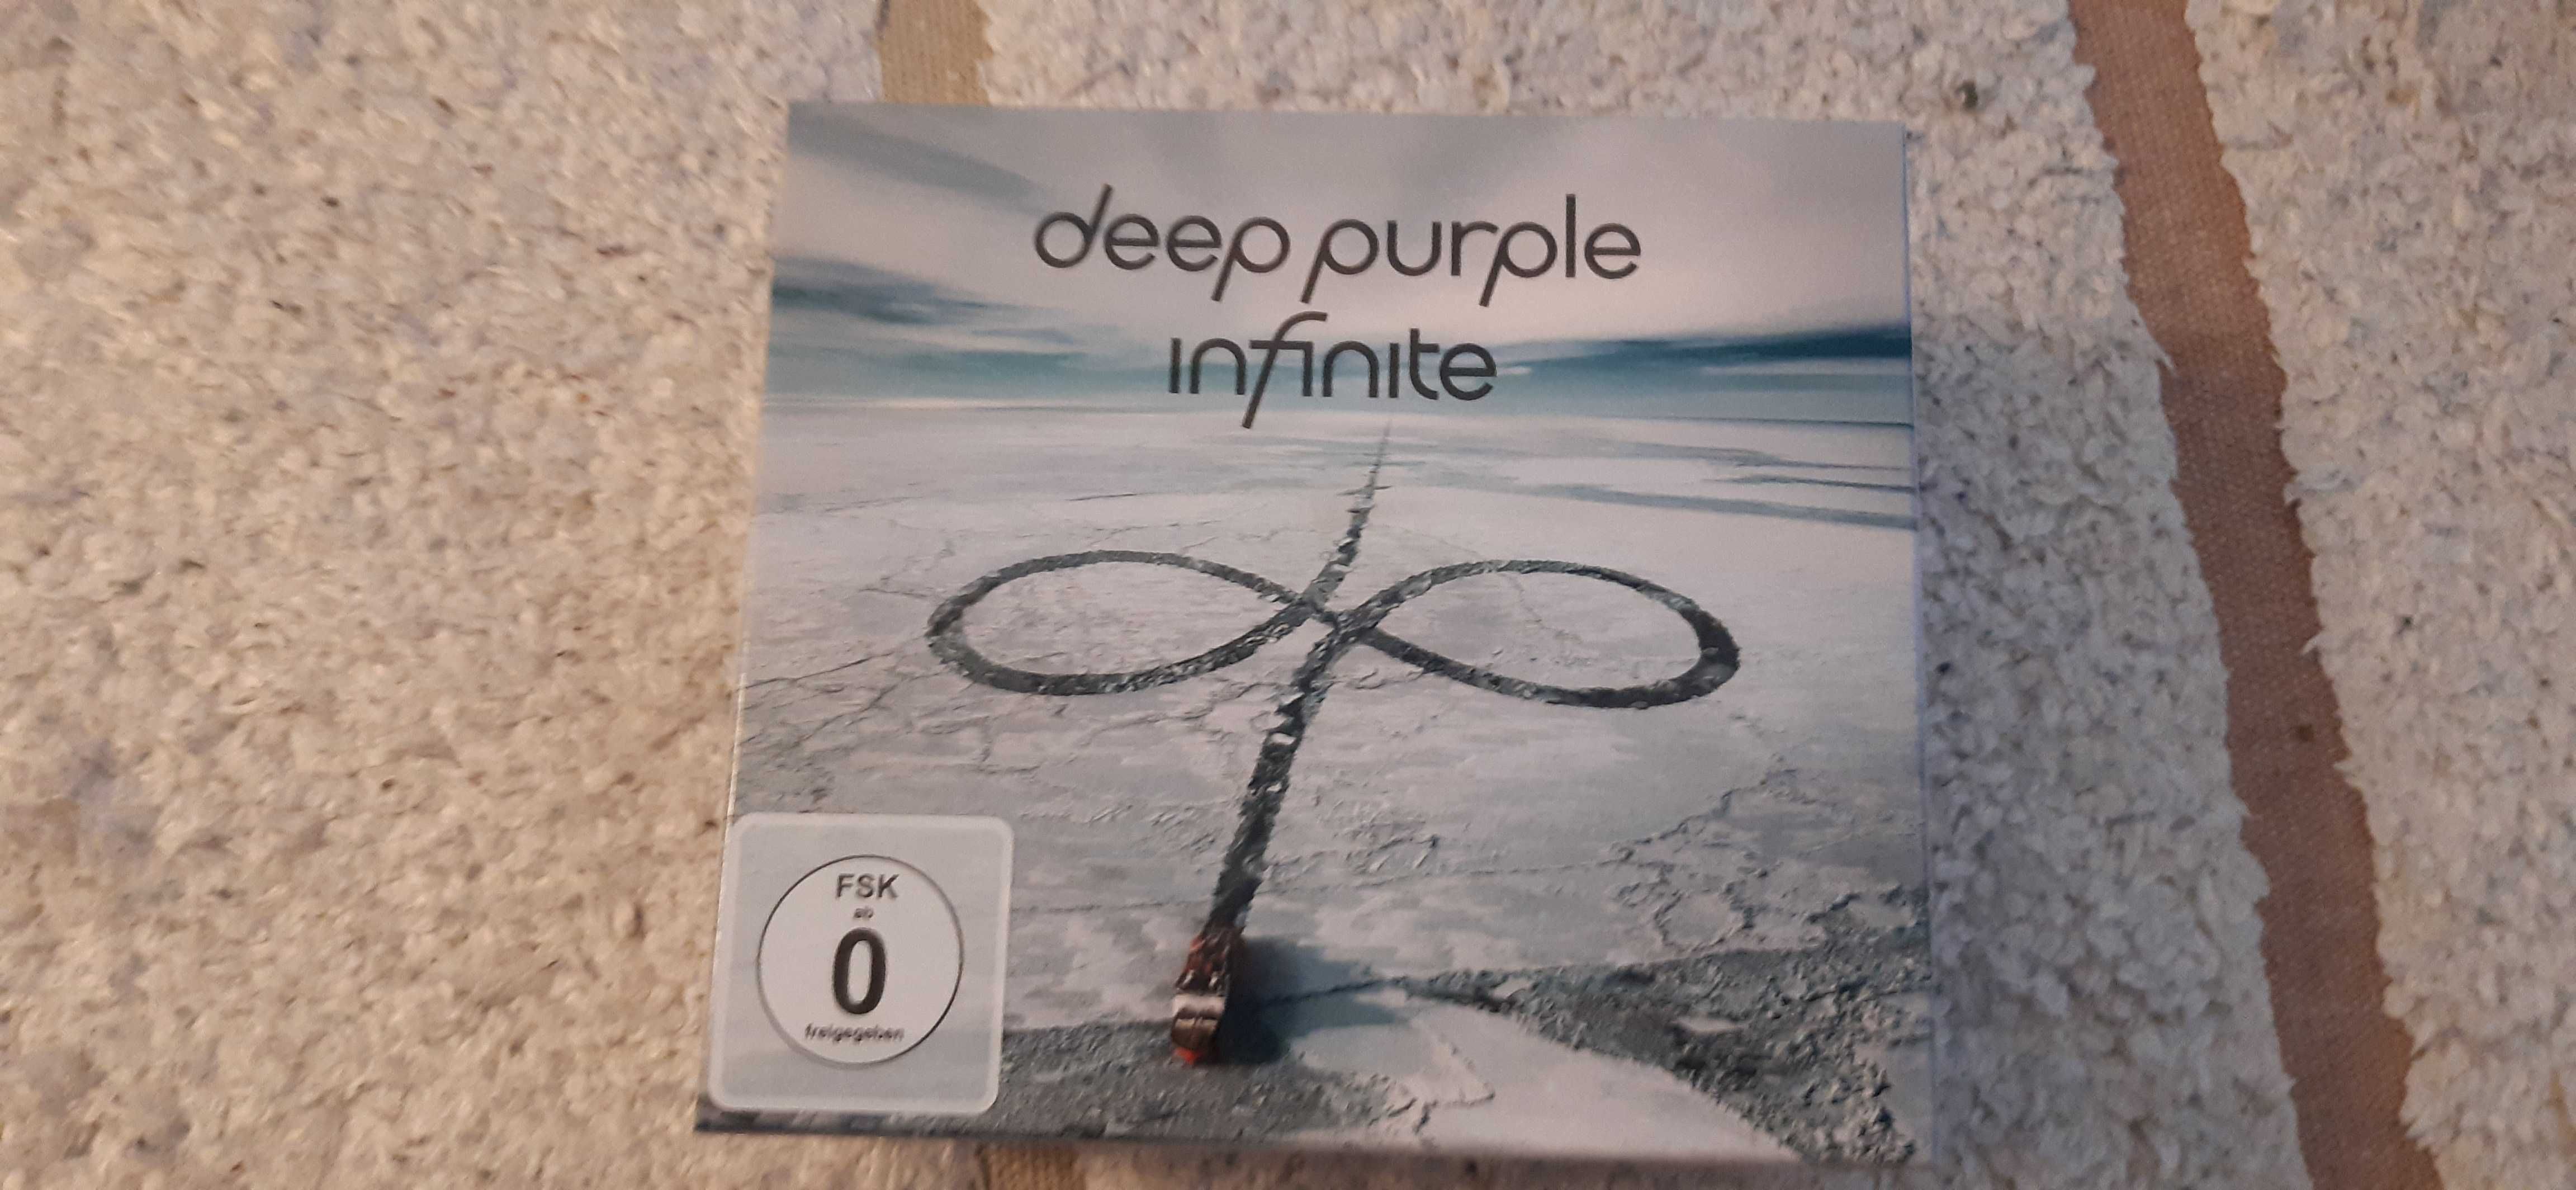 deep purple infinite, zestaw box płyta i koszulka